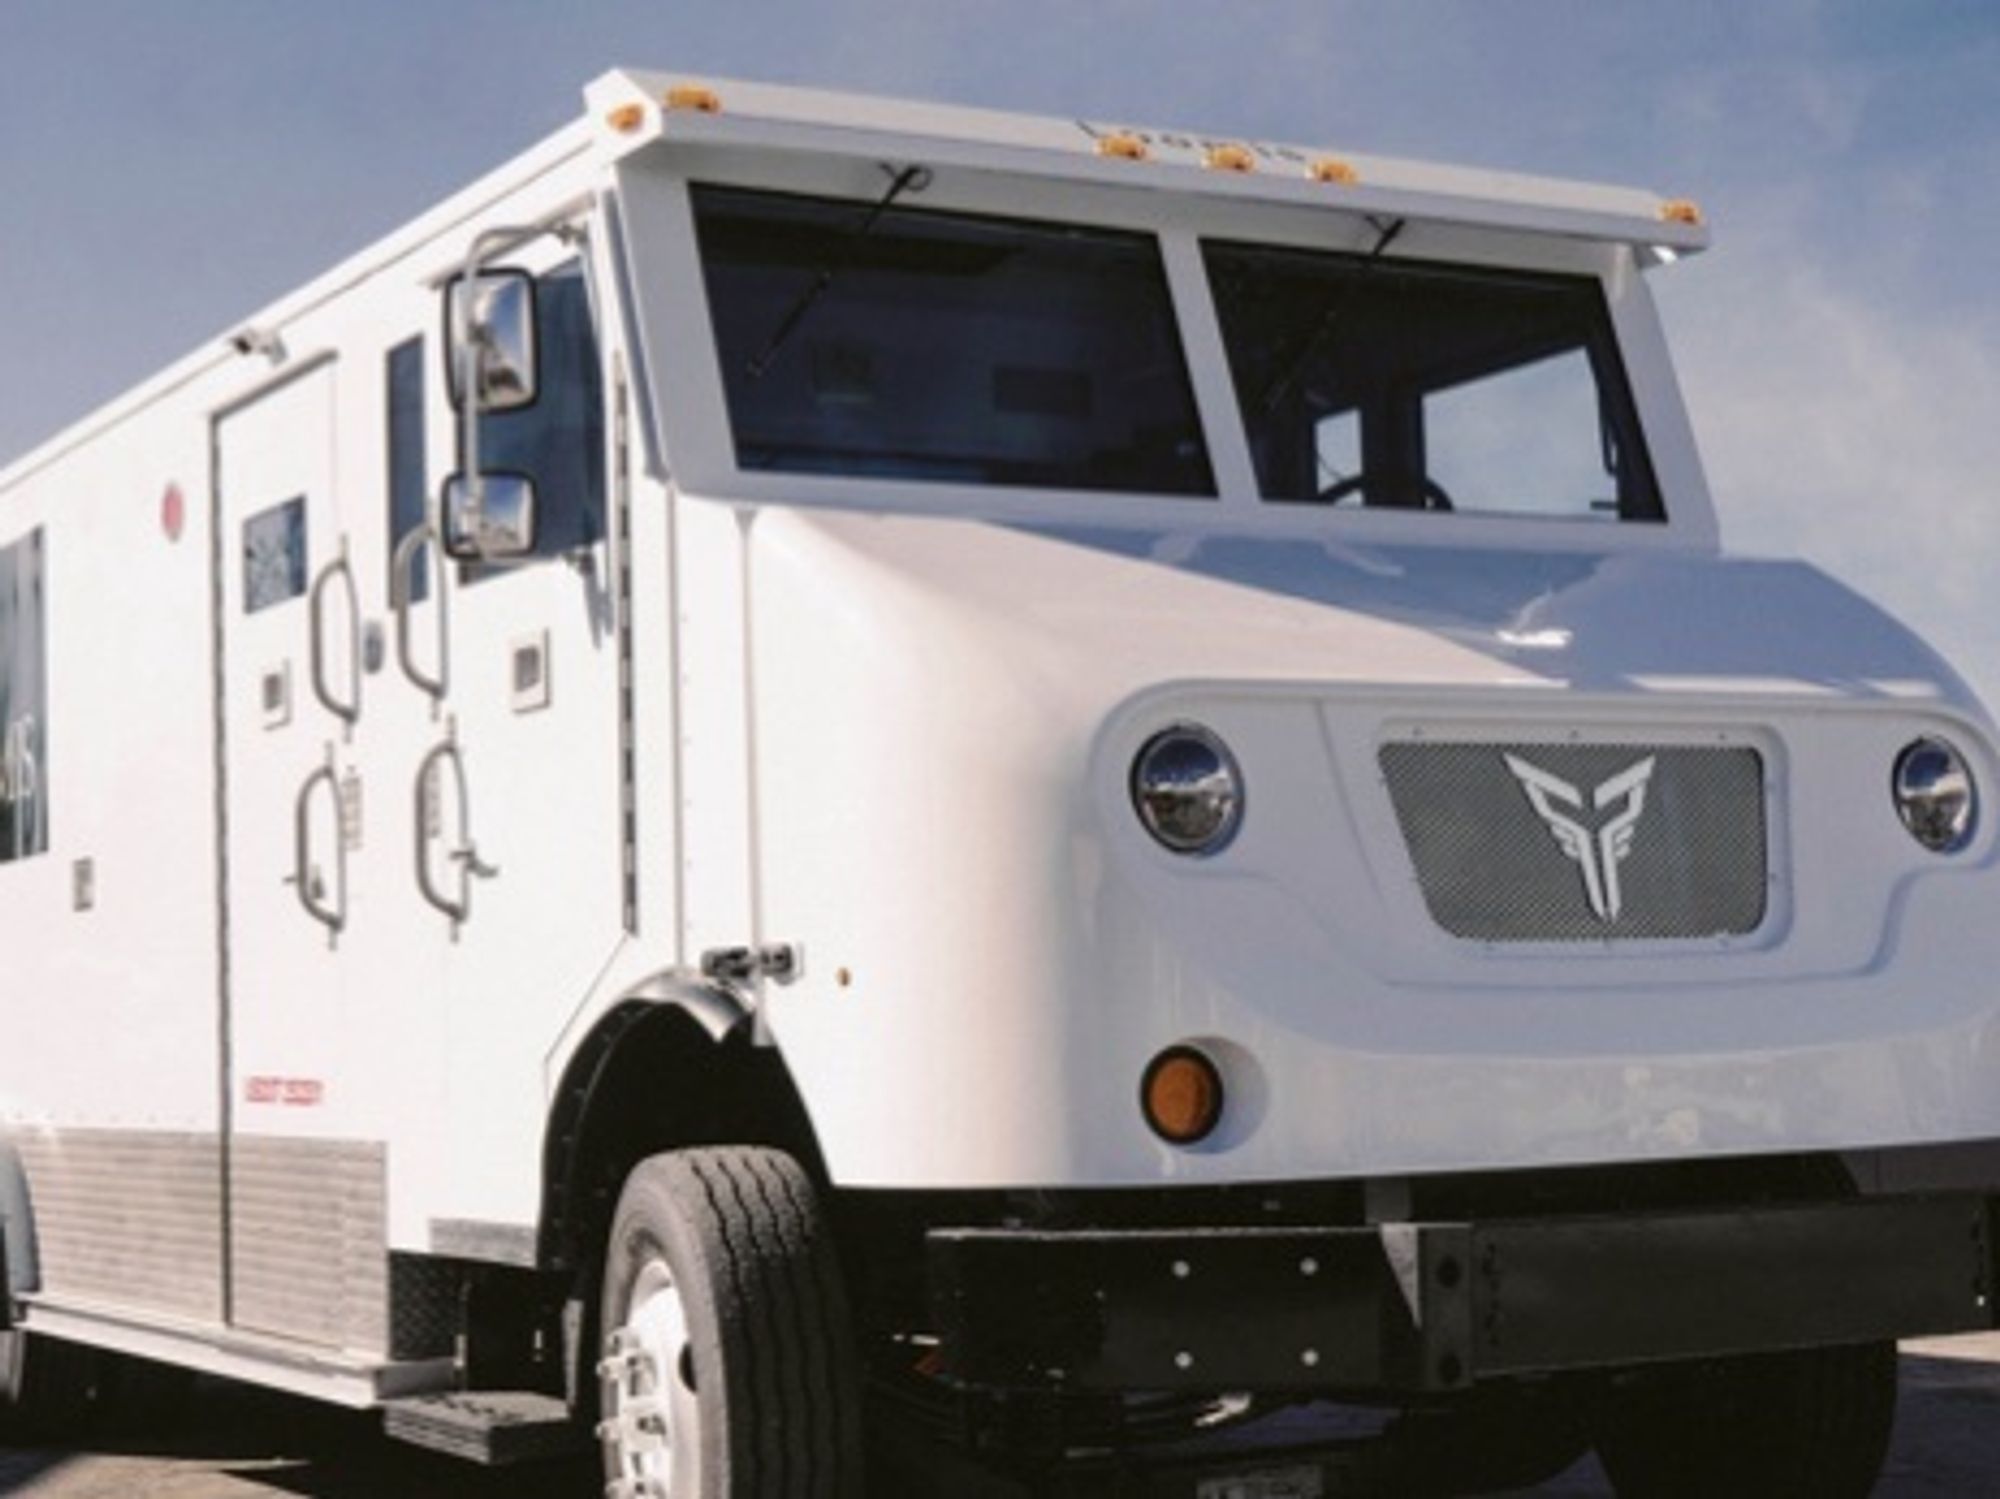 LA's Xos Electric Truck-Maker Will Go Public Through SPAC